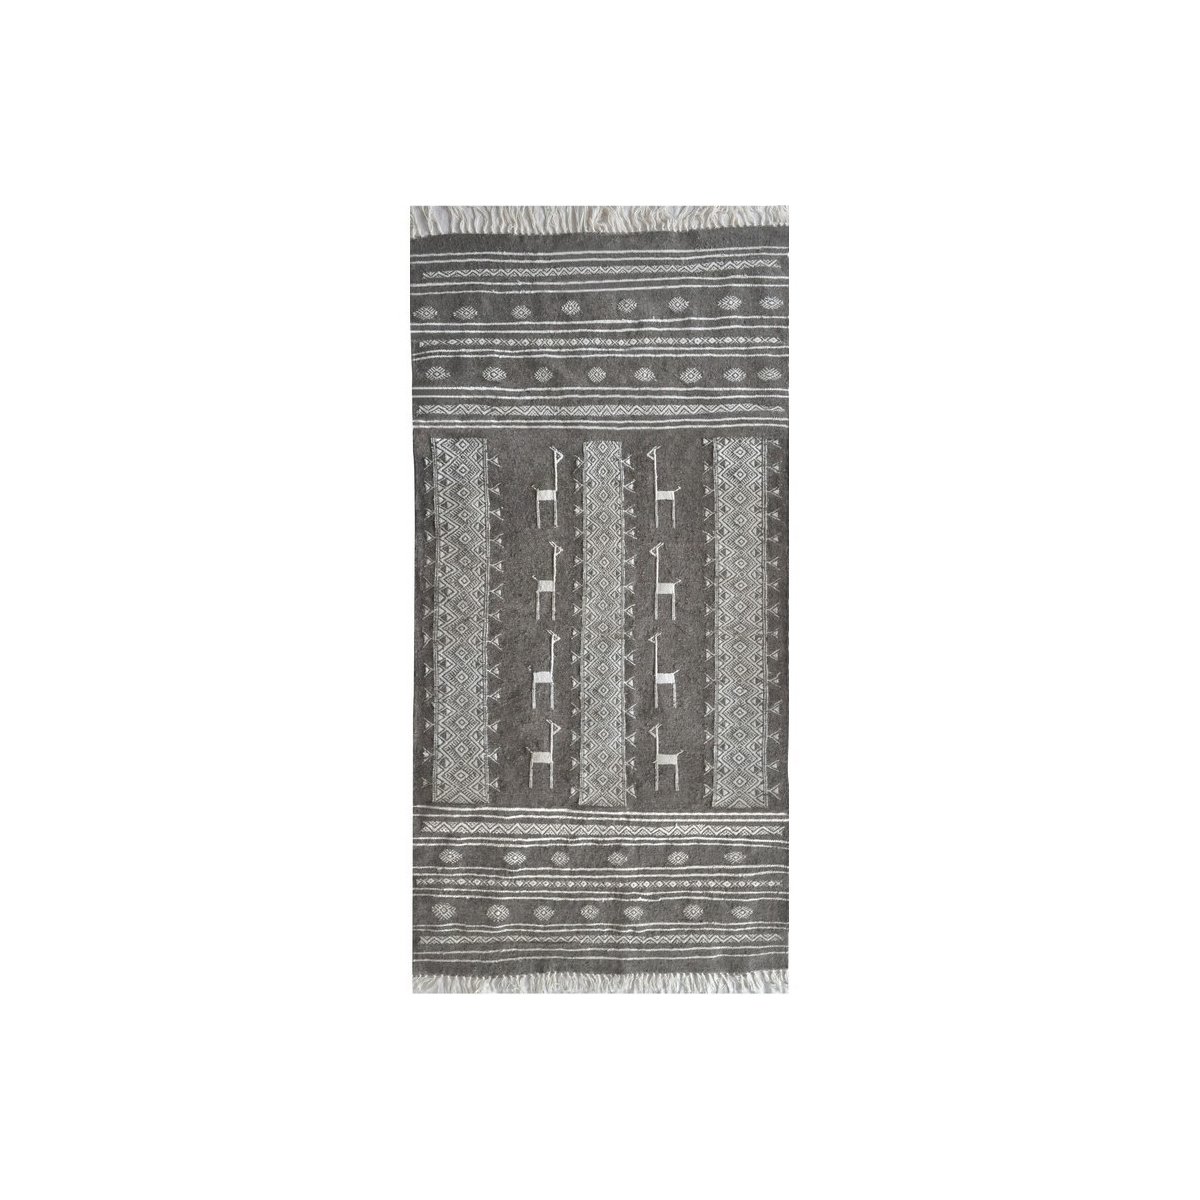 Berber carpet Rug Kilim Hassi Amor 130x190 Grey/Black/White (Handmade, Wool) Tunisian Rug Kilim style Moroccan rug. Rectangular 